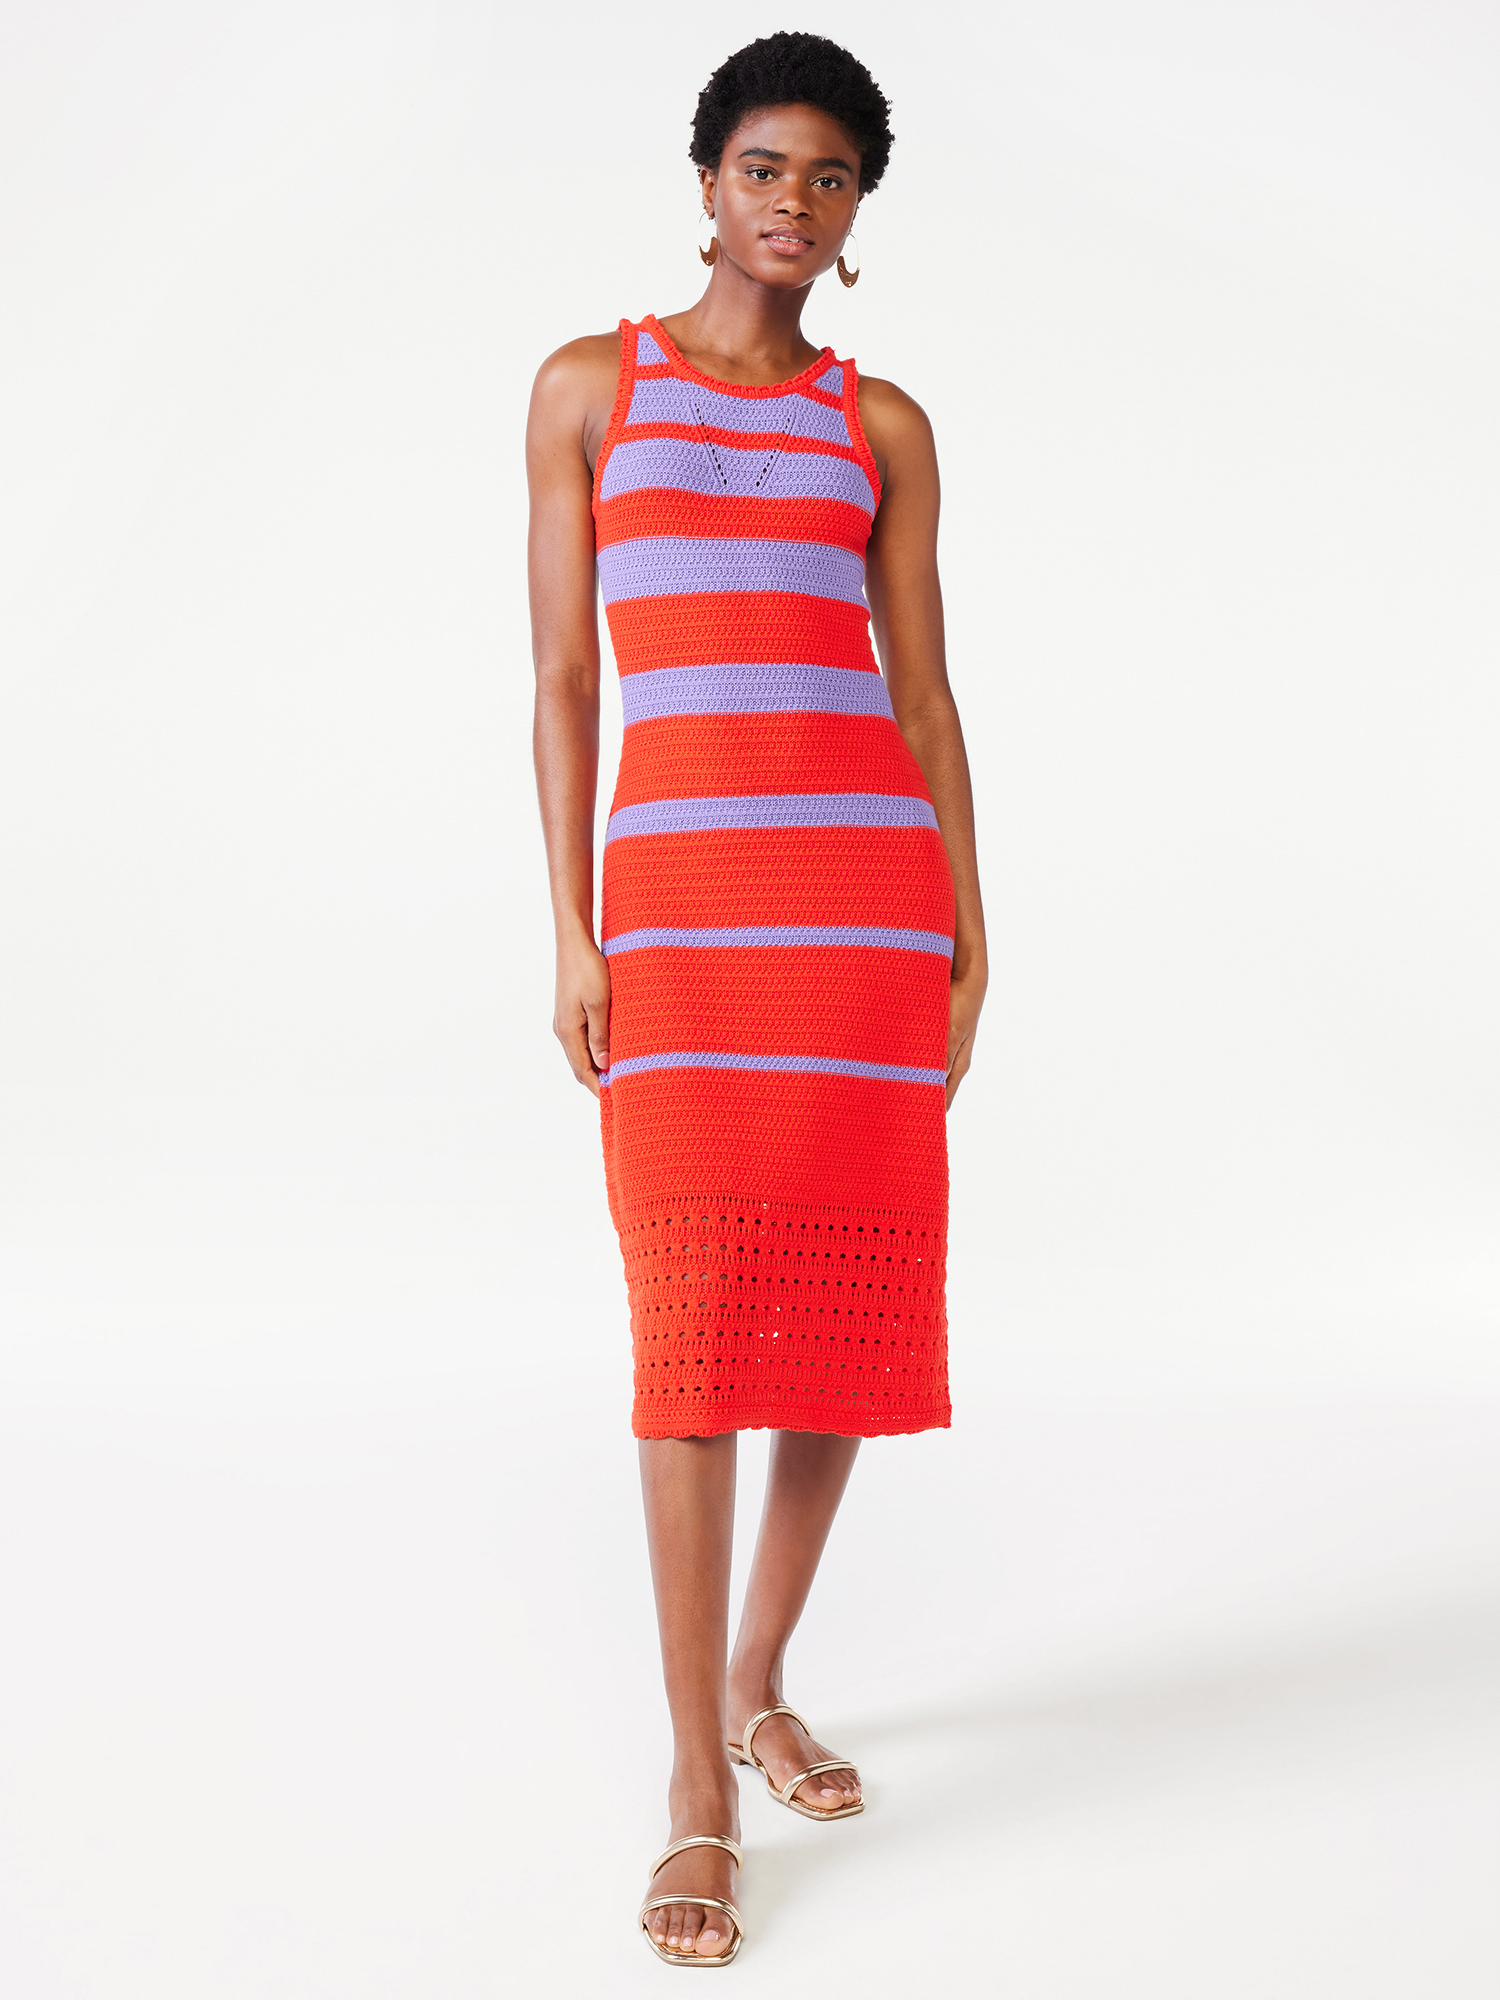 Scoop Women’s Striped Crochet Dress, Mid-Calf Length - image 1 of 4